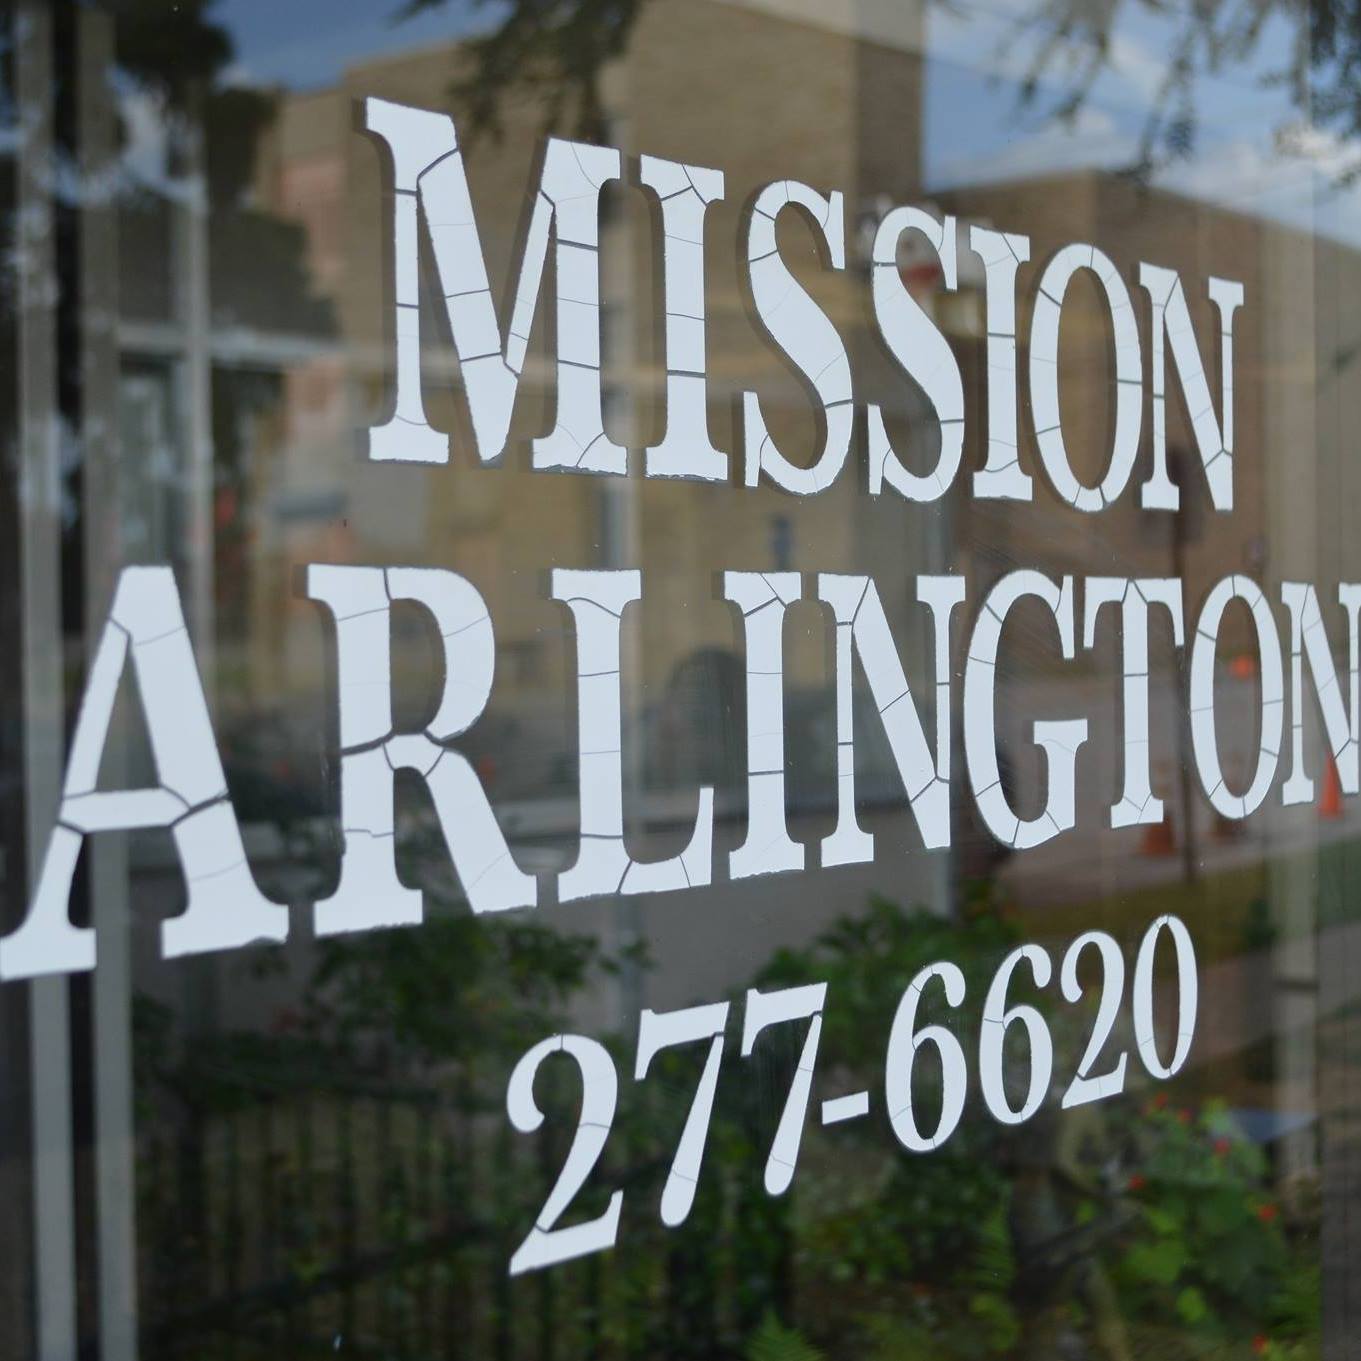 Mission Arlington Dental Clinic